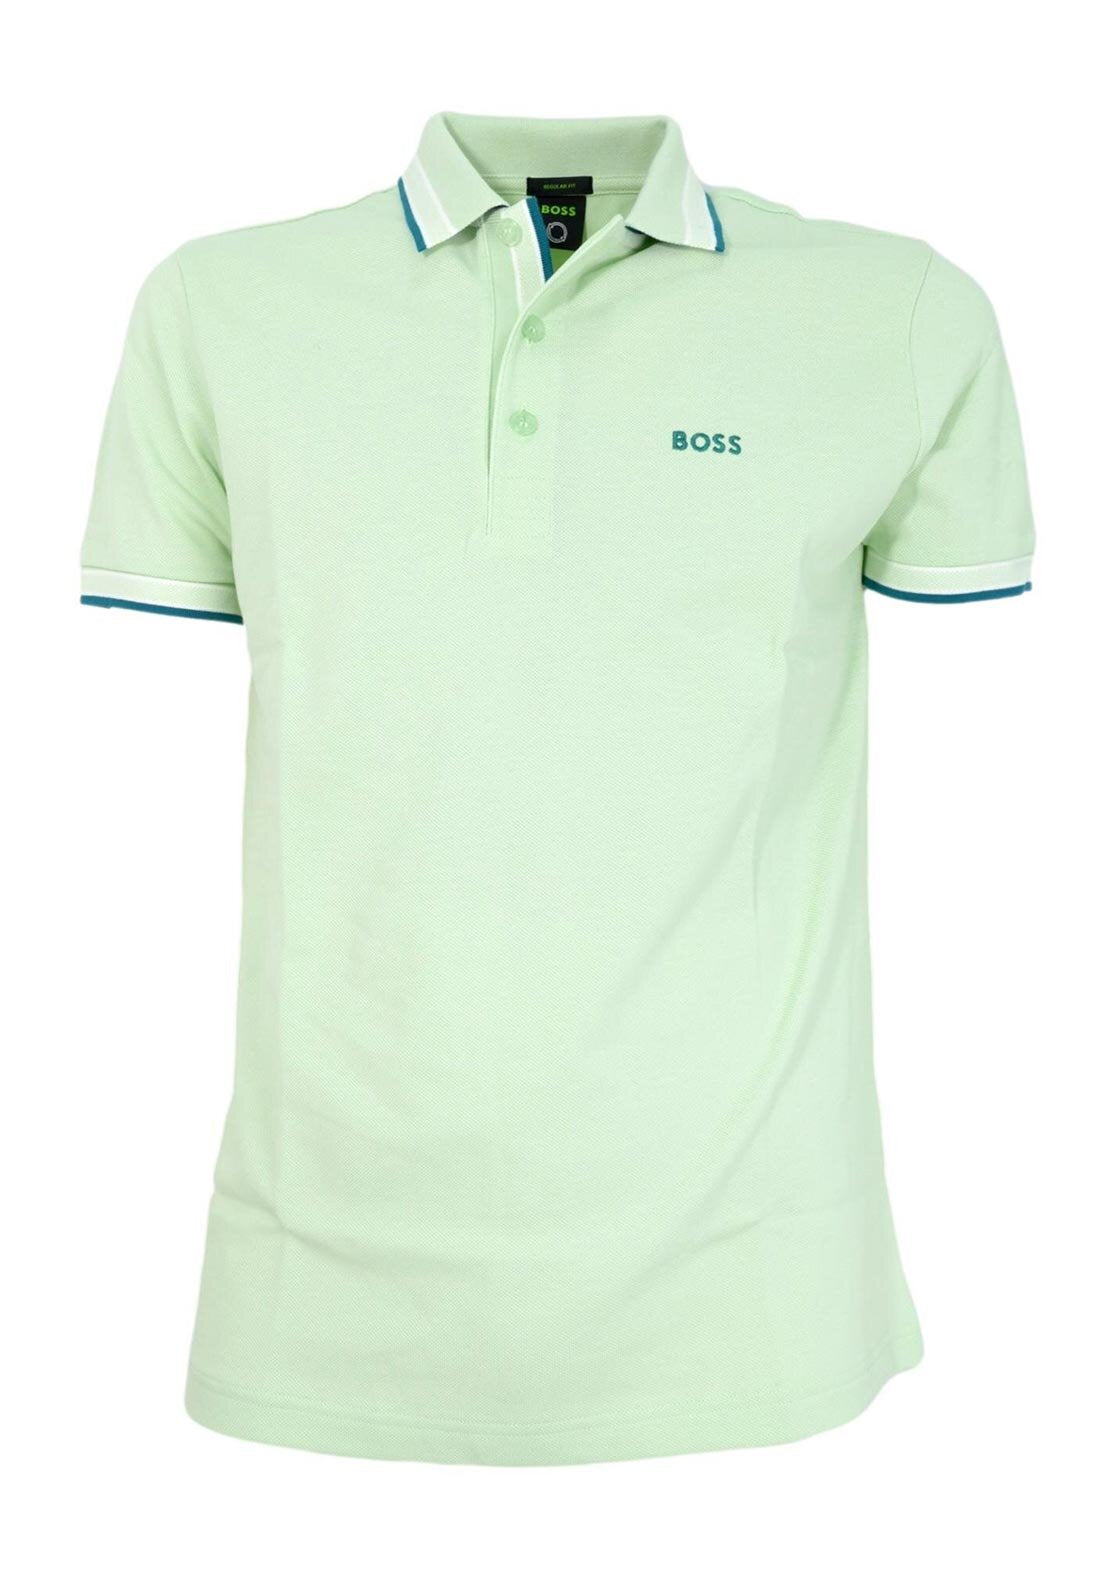 McElhinneys Paddy Shirt, Hugo Boss Polo Mint - Green